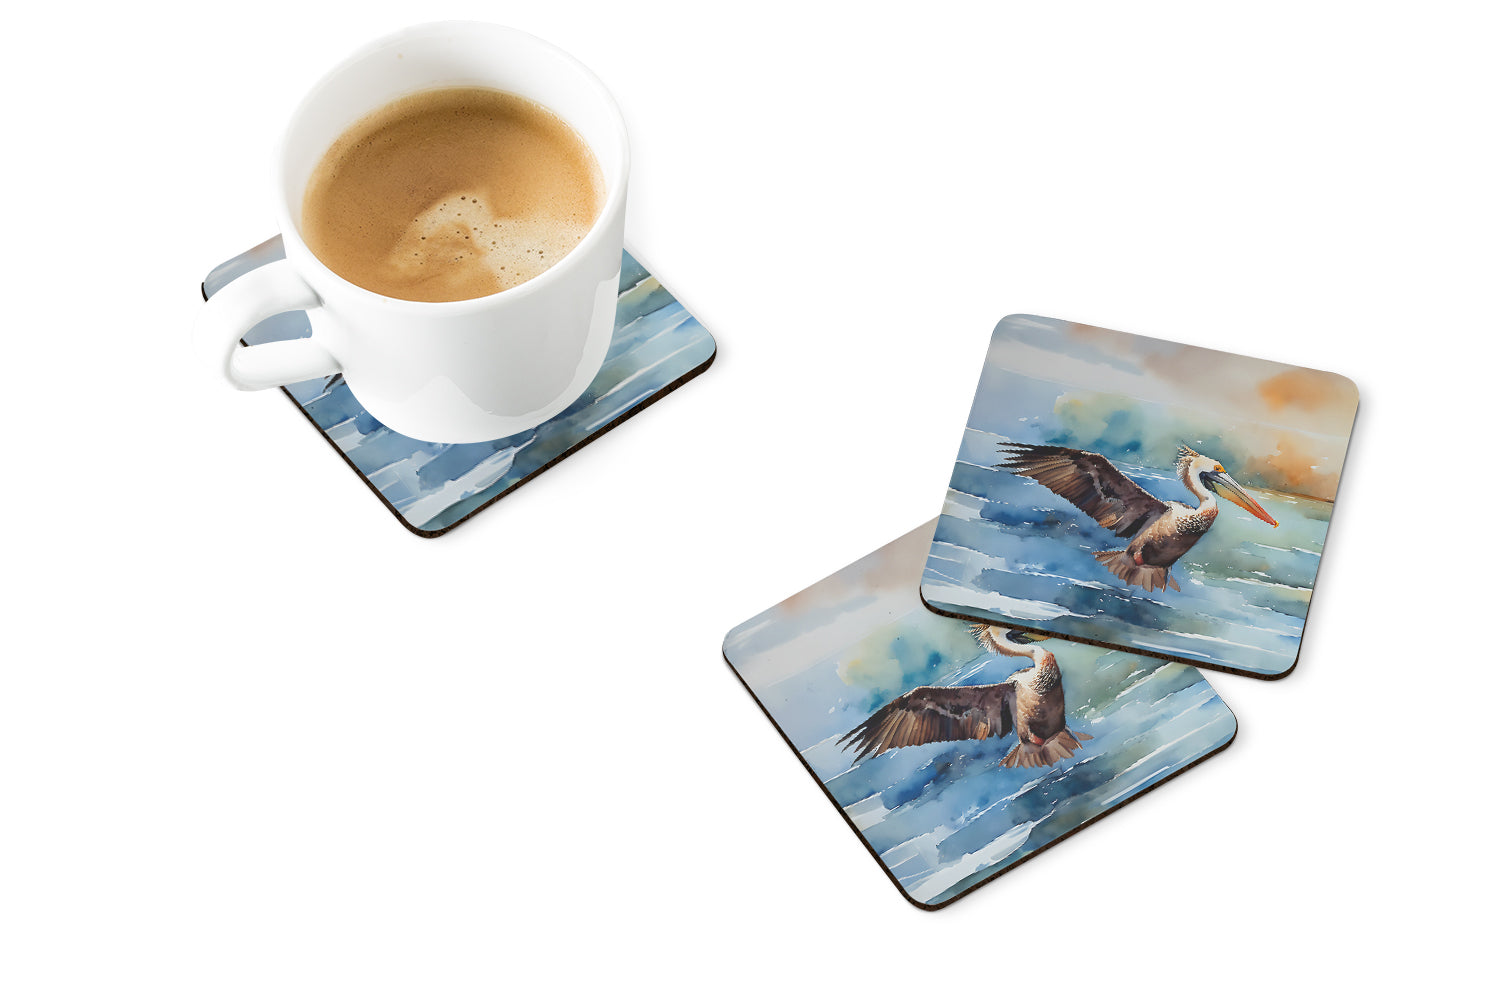 Pelican Foam Coasters